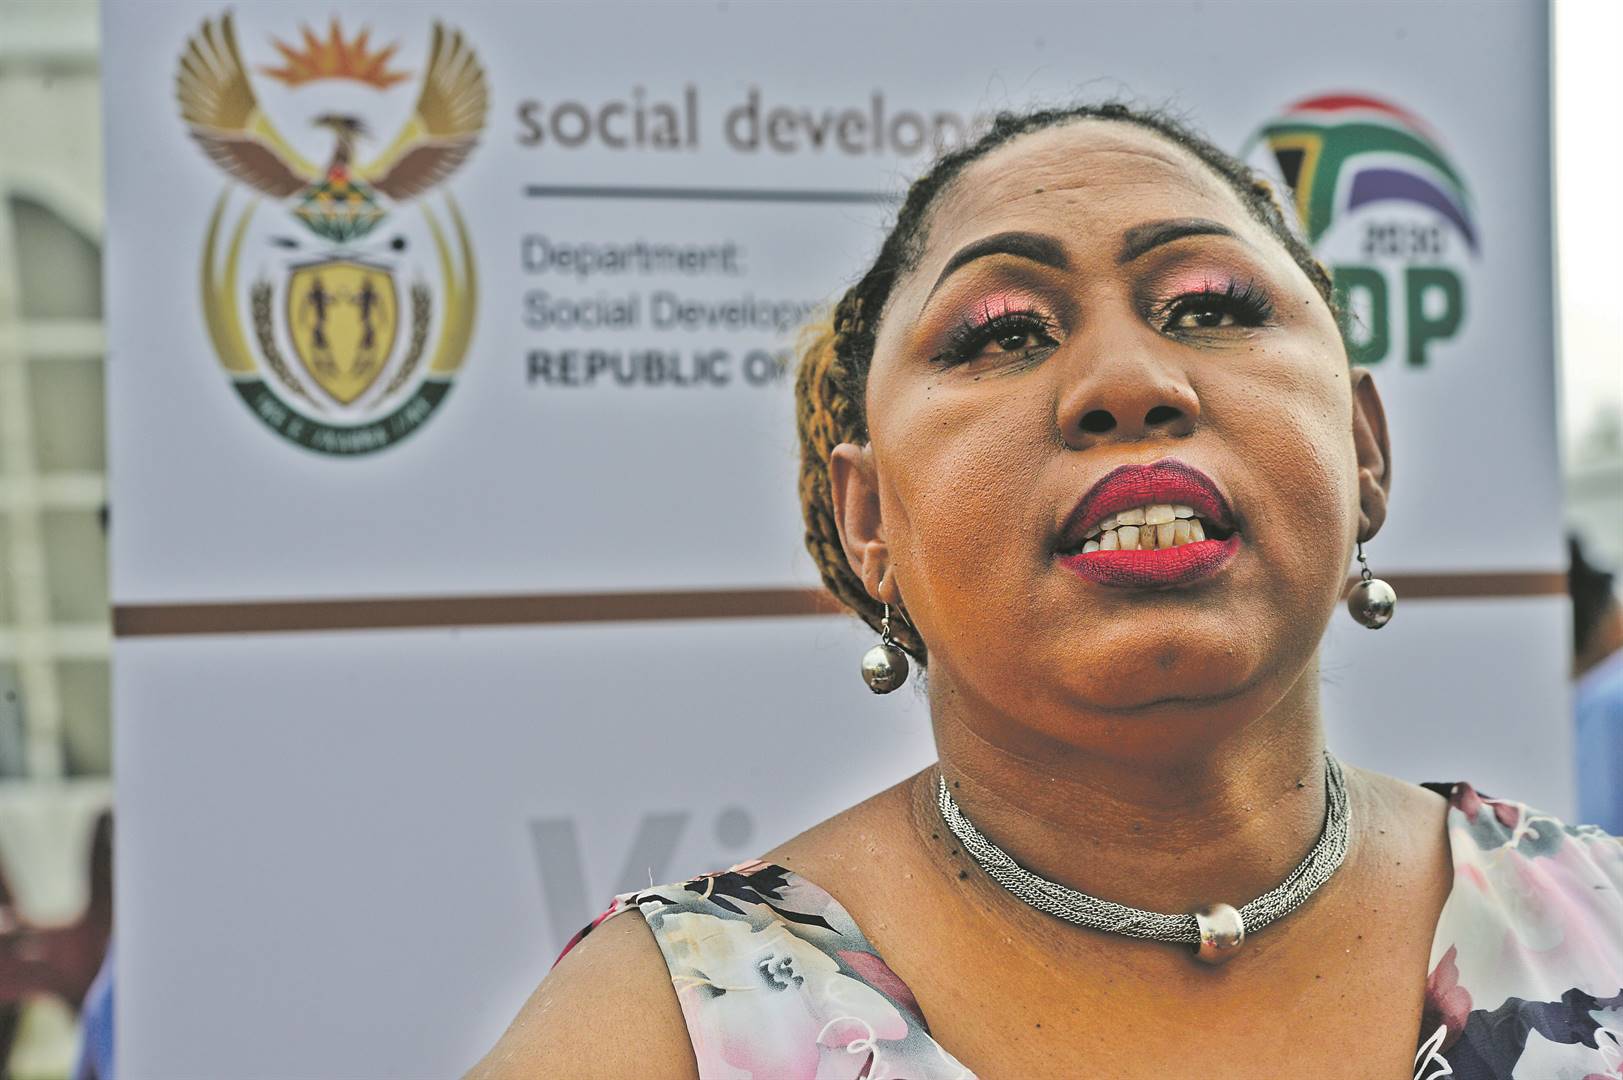 Deputy Minister of Social Development Hendrietta-Bogopane-Zulu says the White Door Centre will bring hope to the survivors and victims in Seoding. Picture: Cebile Ntuli